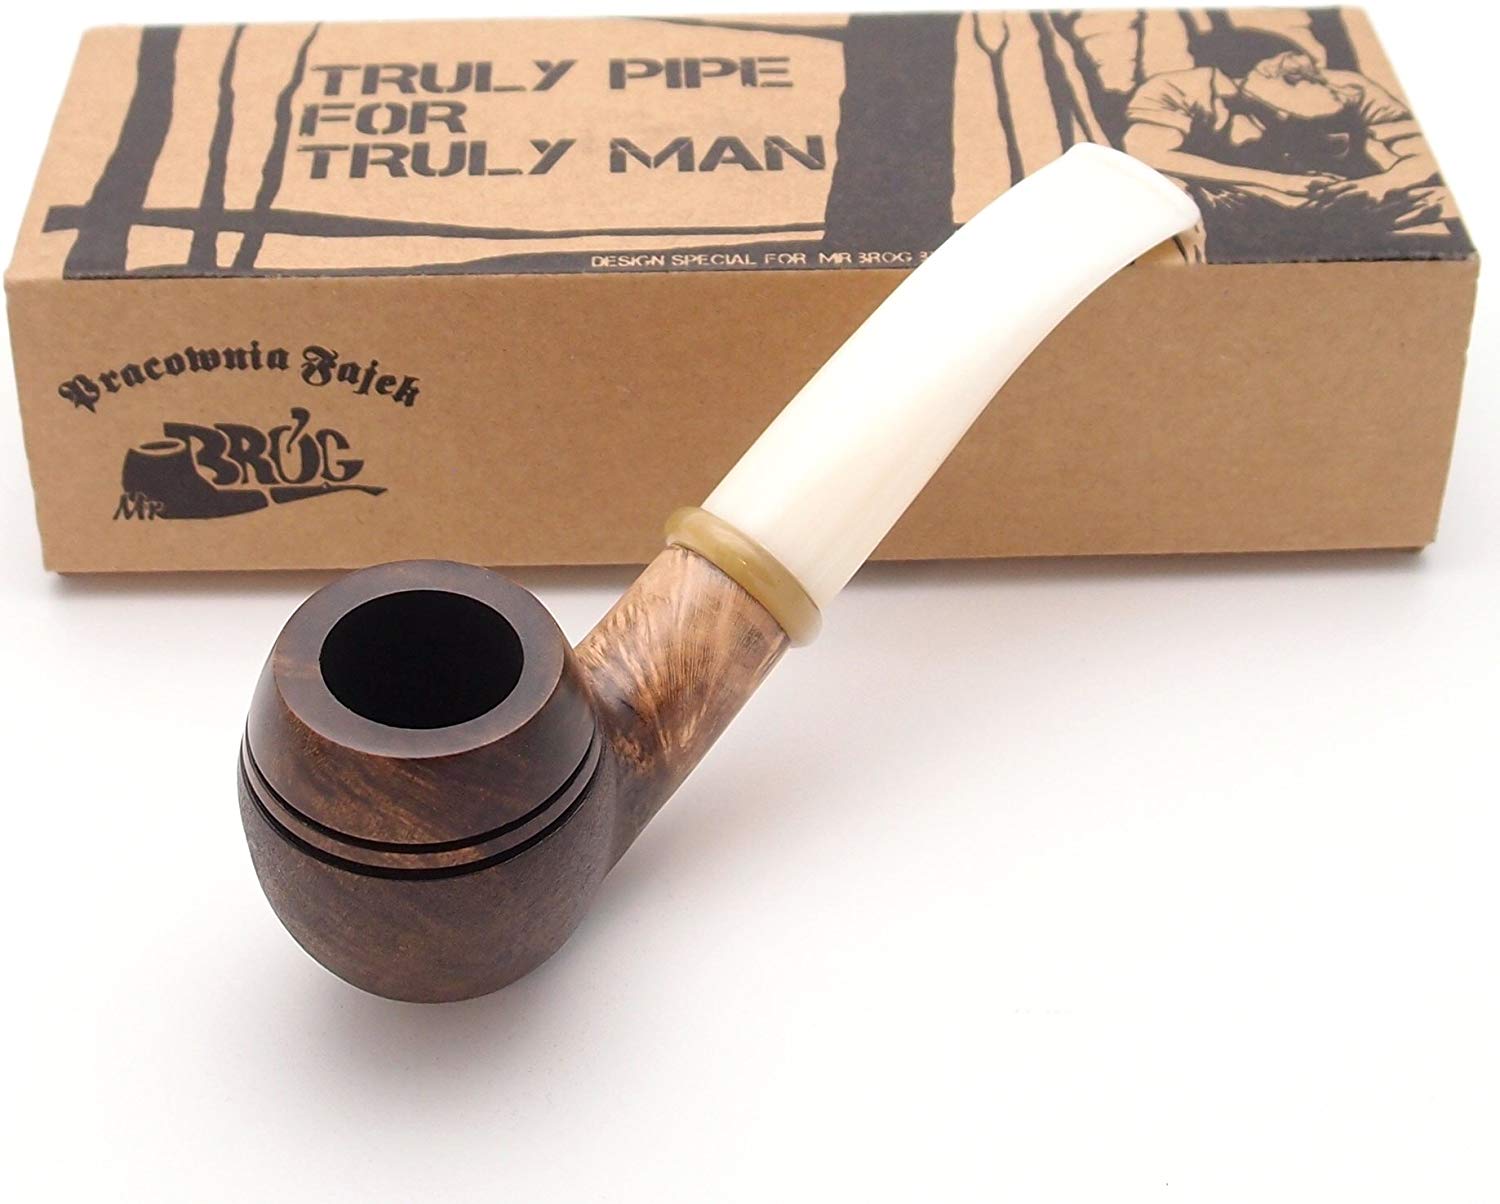 Mr. Brog Smoking Pipe - Model No. 117 Bishop Walnut Sandblast - Mediterranean Briar Wood - Hand Made Tobacco Pipe